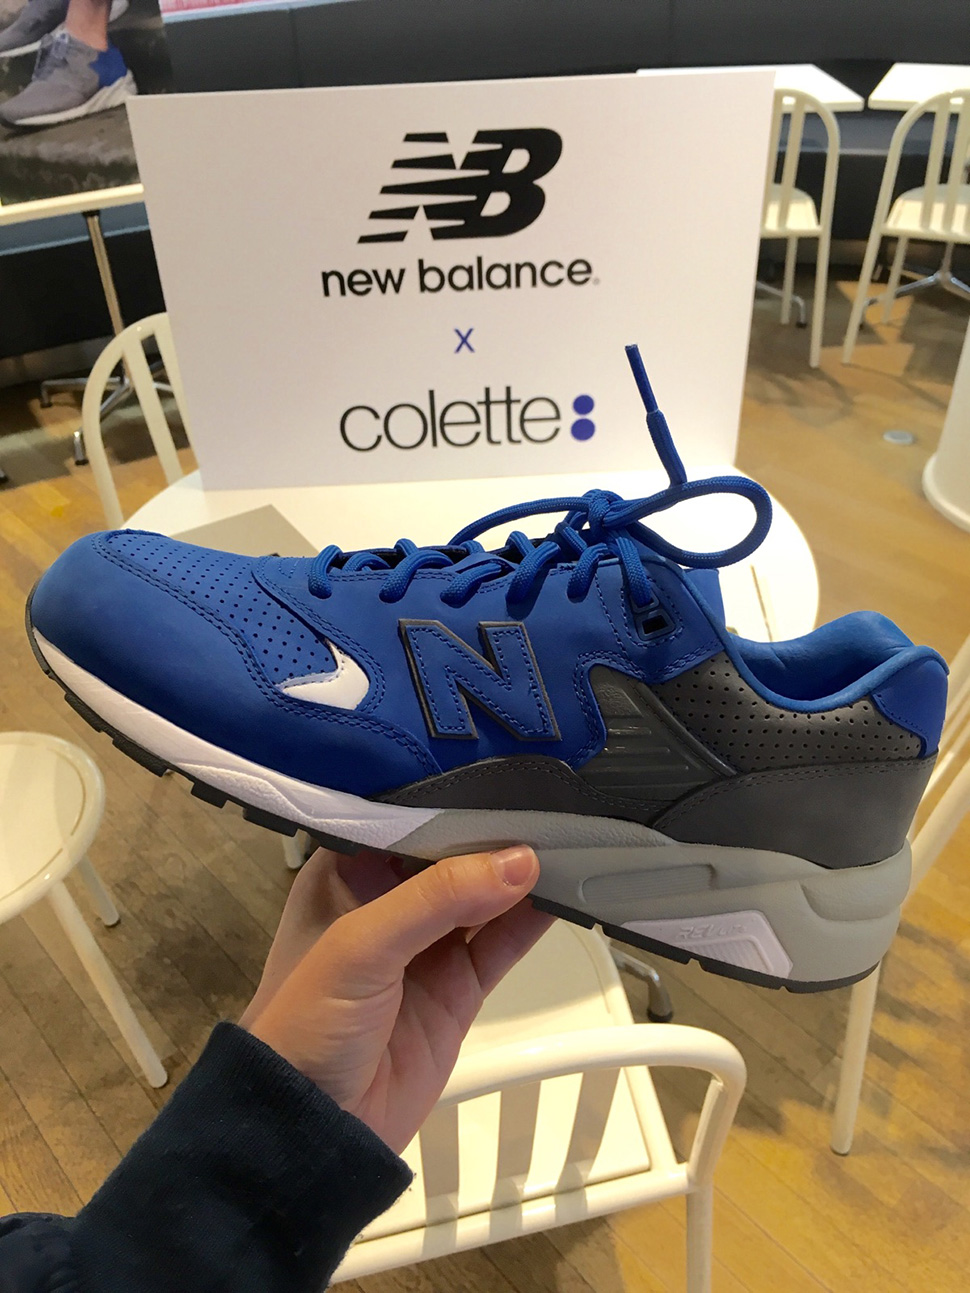 Colette X New Balance 580 Release Date Sneaker Bar Detroit